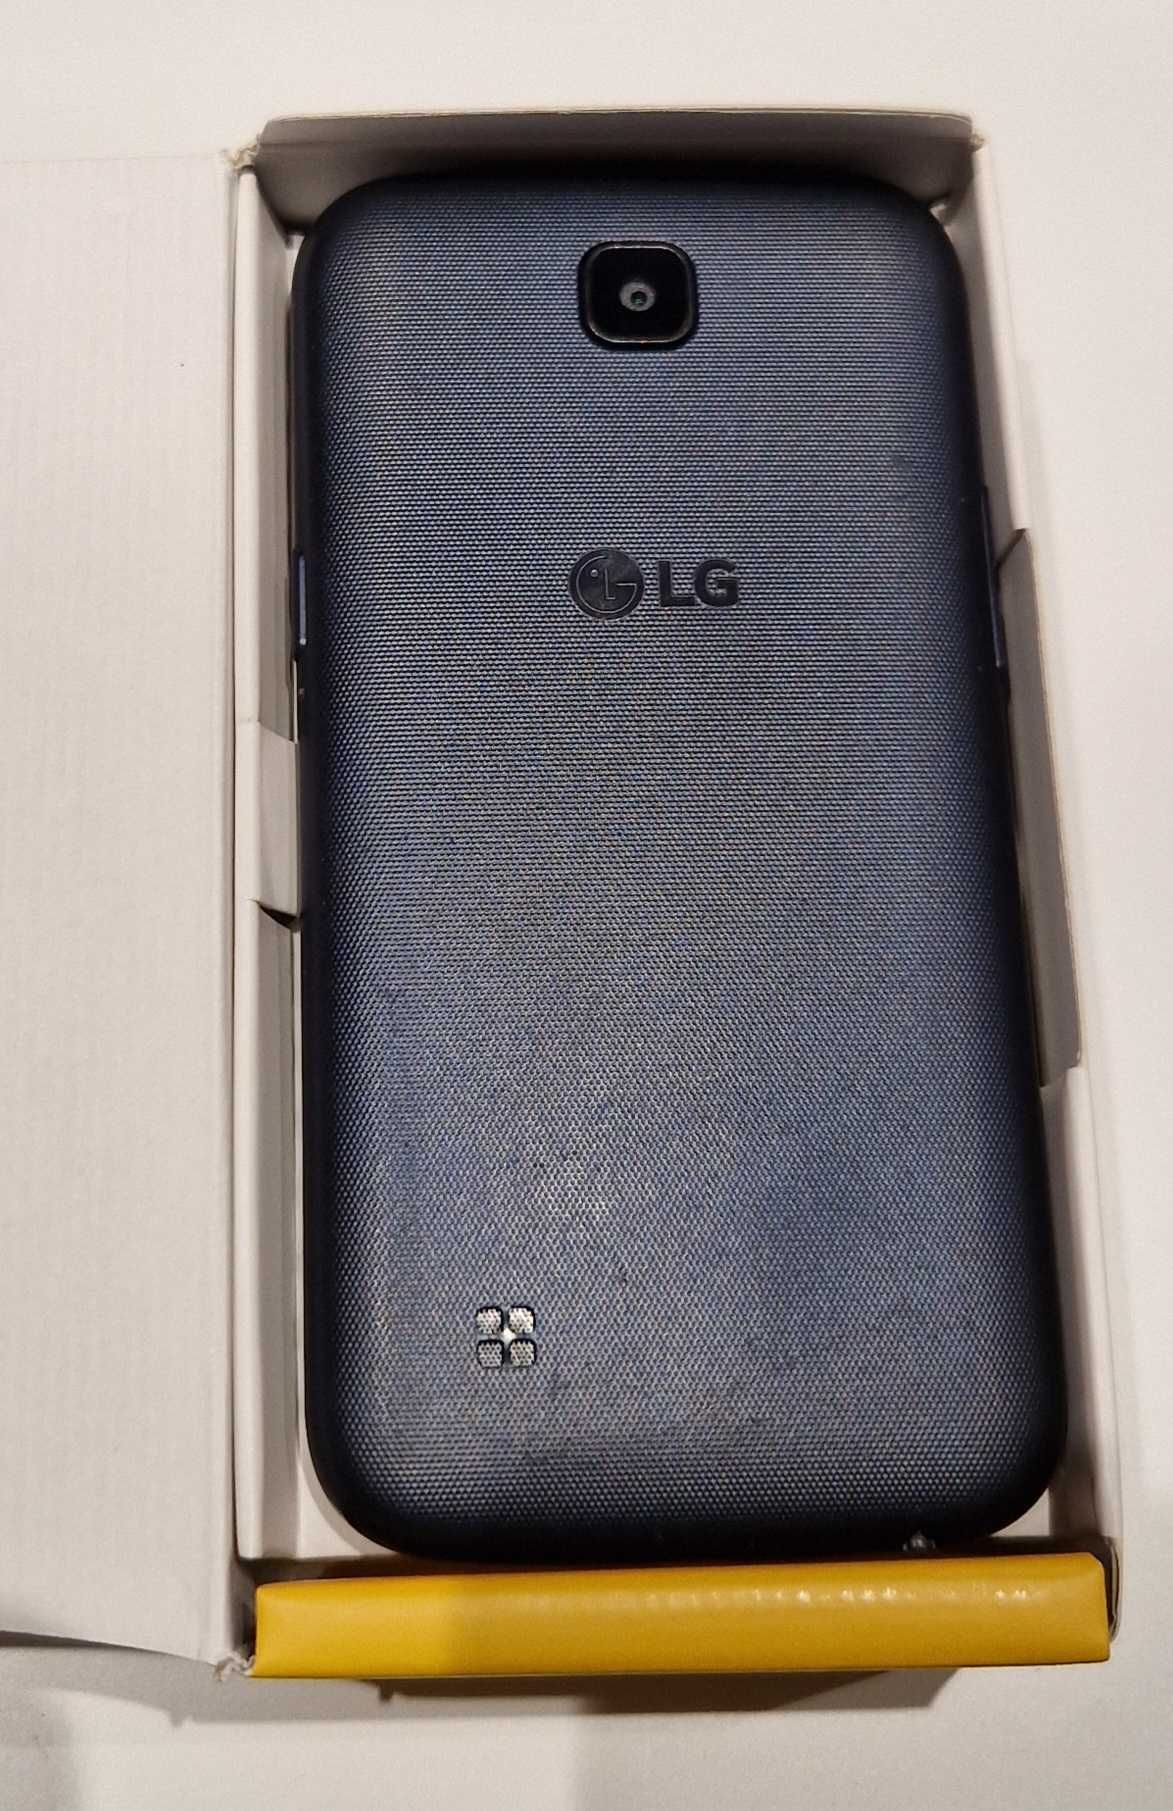 LG K3 LTE black blue